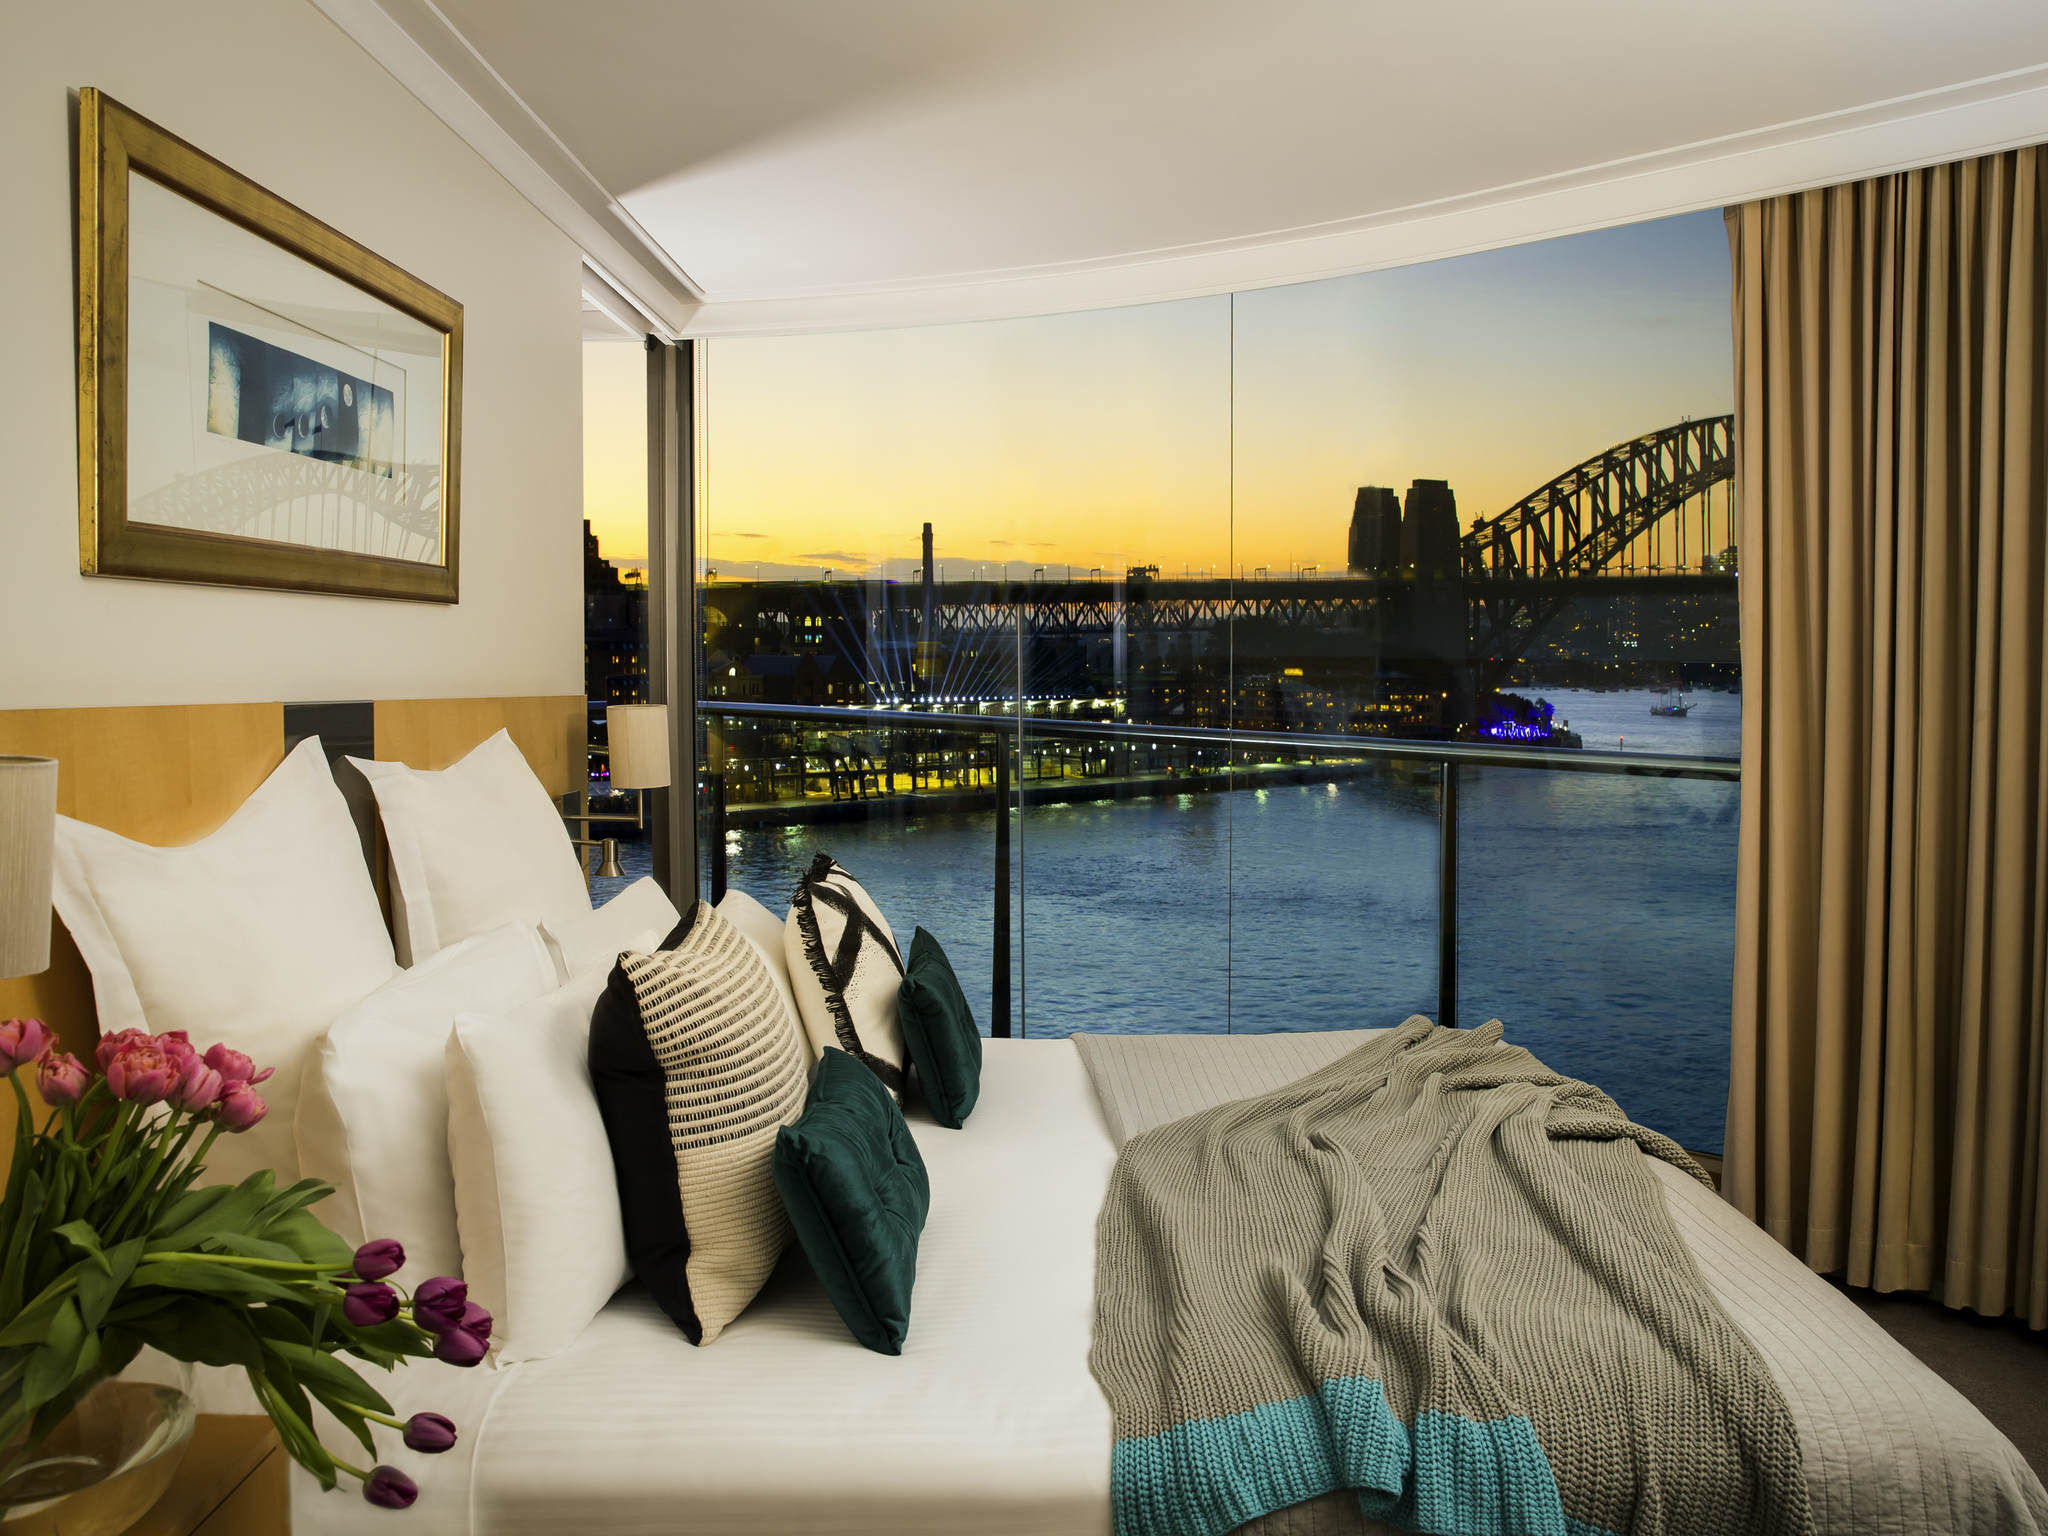 <a href="https://all.accor.com/gb/hotel-8779-pullman-quay-grand-sydney-harbour/index.shtml">Pullman Quay Grand Sydney Harbour Hotel</a>